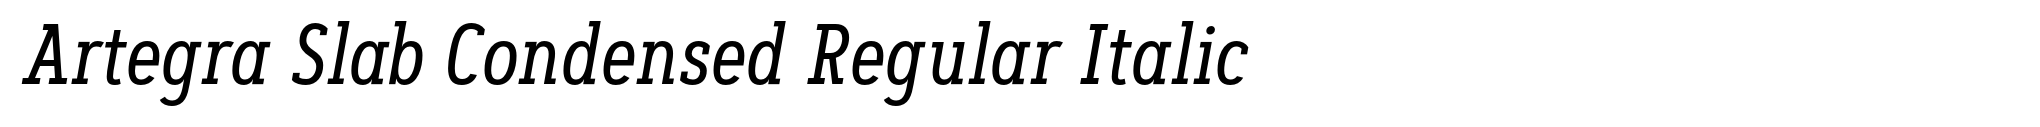 Artegra Slab Condensed Regular Italic image